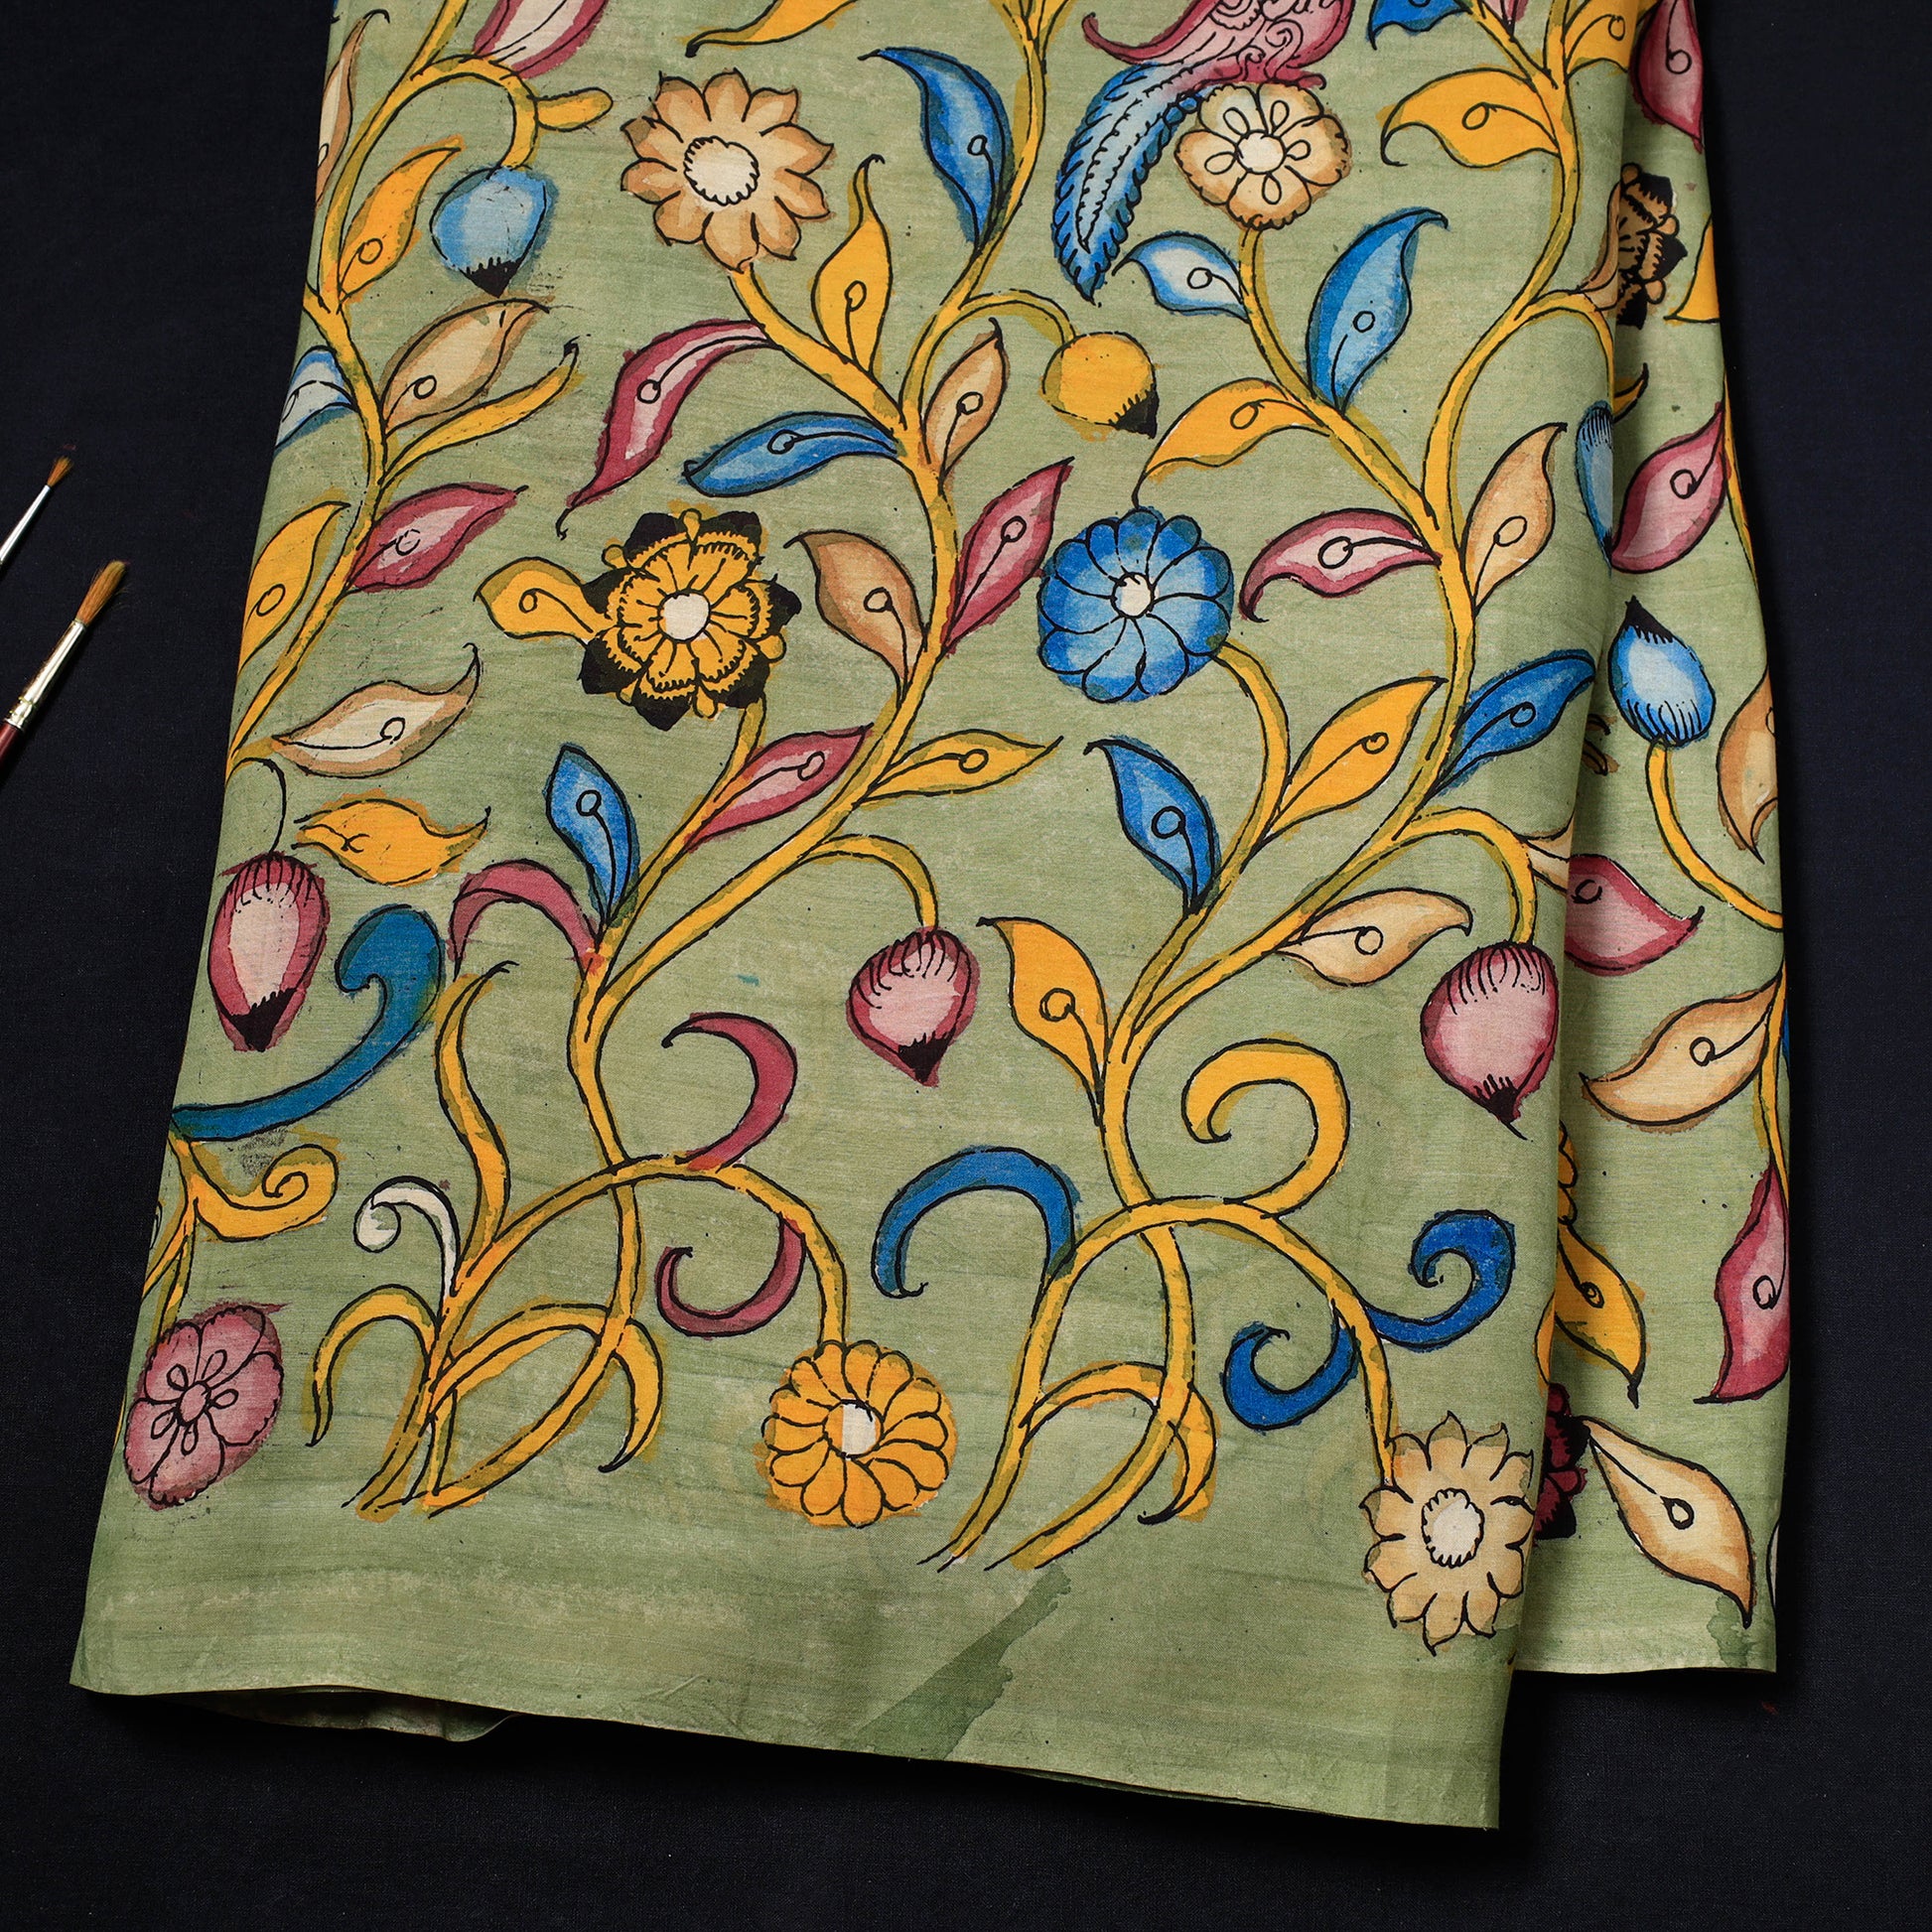 Srikalahasti Kalamkari Pen Work Fabric
